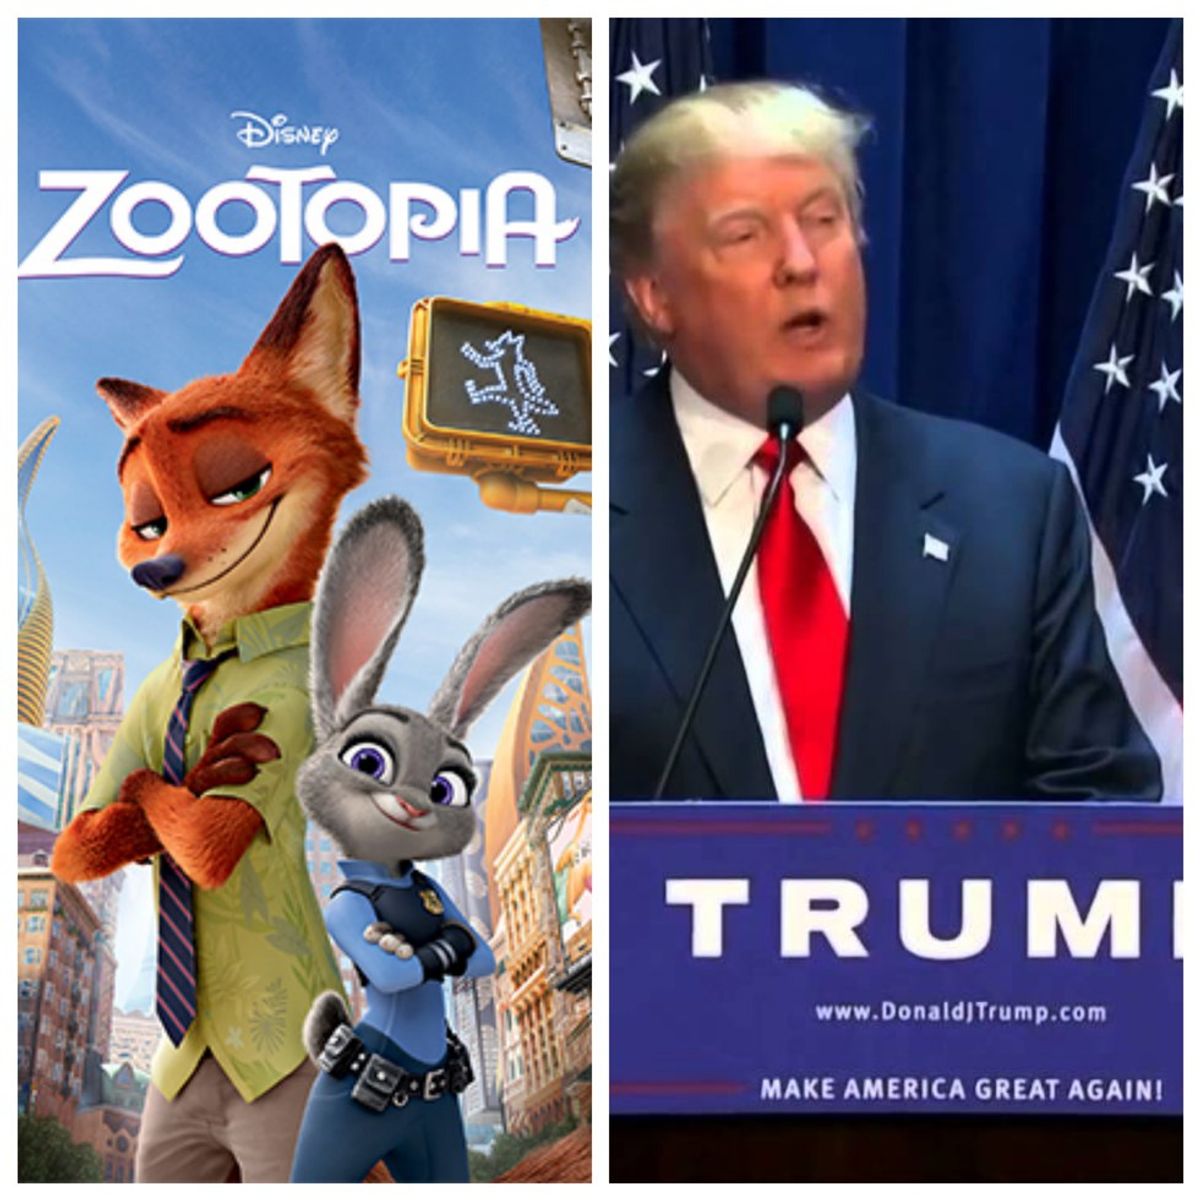 6 Reasons Donald Trump Needs to Watch "Zootopia"